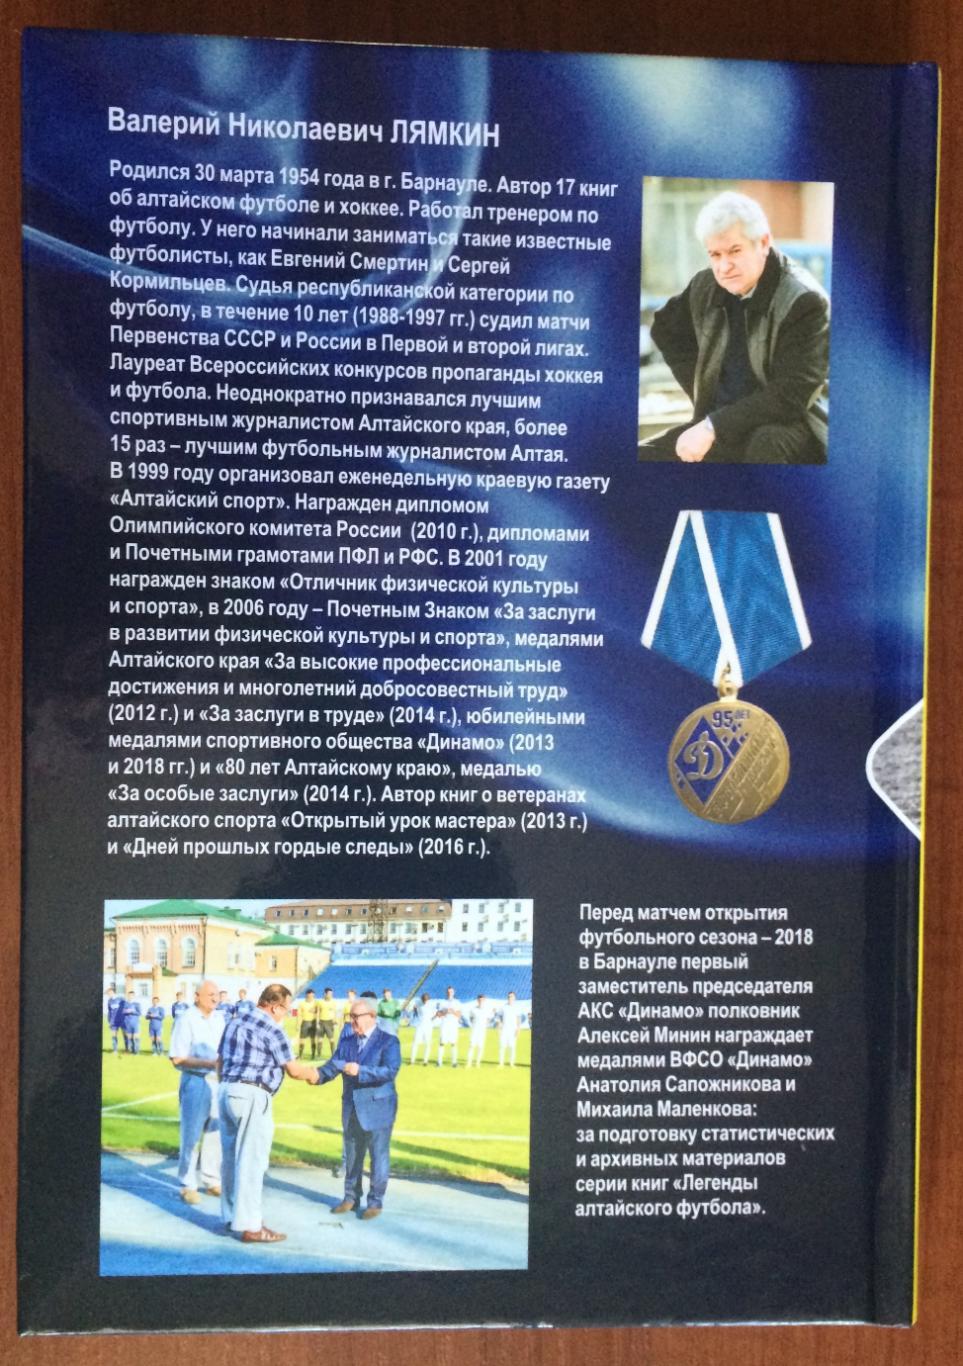 Легенды Алтайского футбола книга двенадцатая 2019 год 1